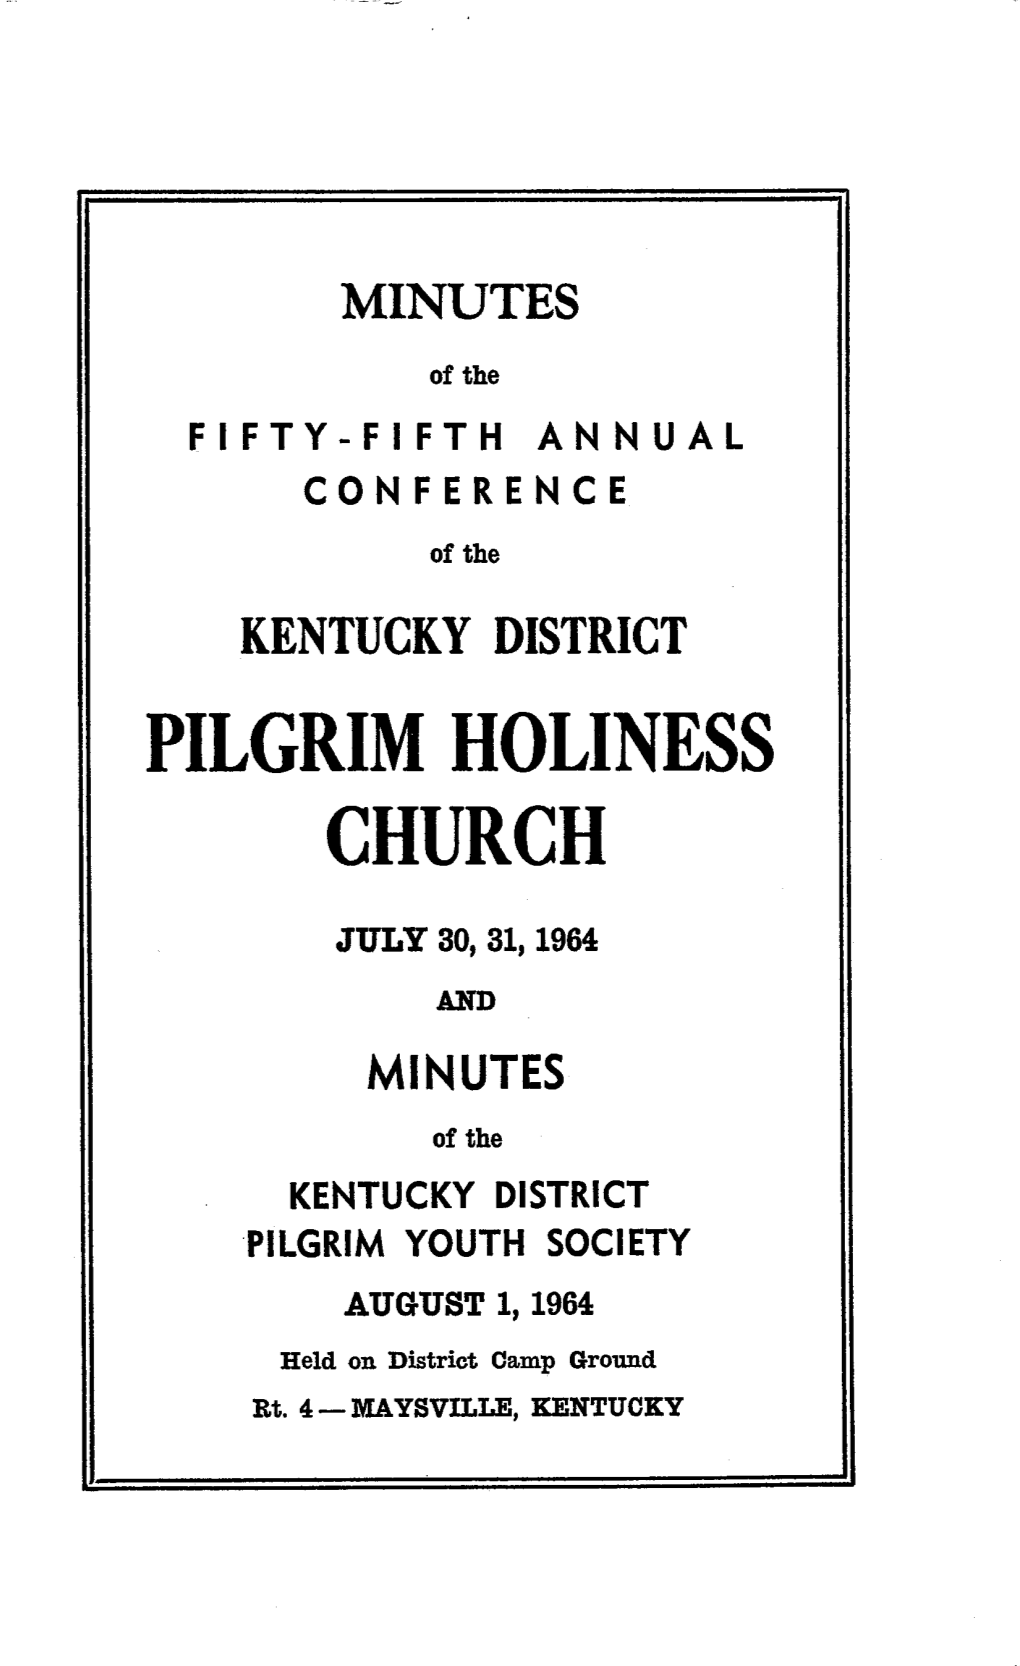 Pilgrim Holiness Church